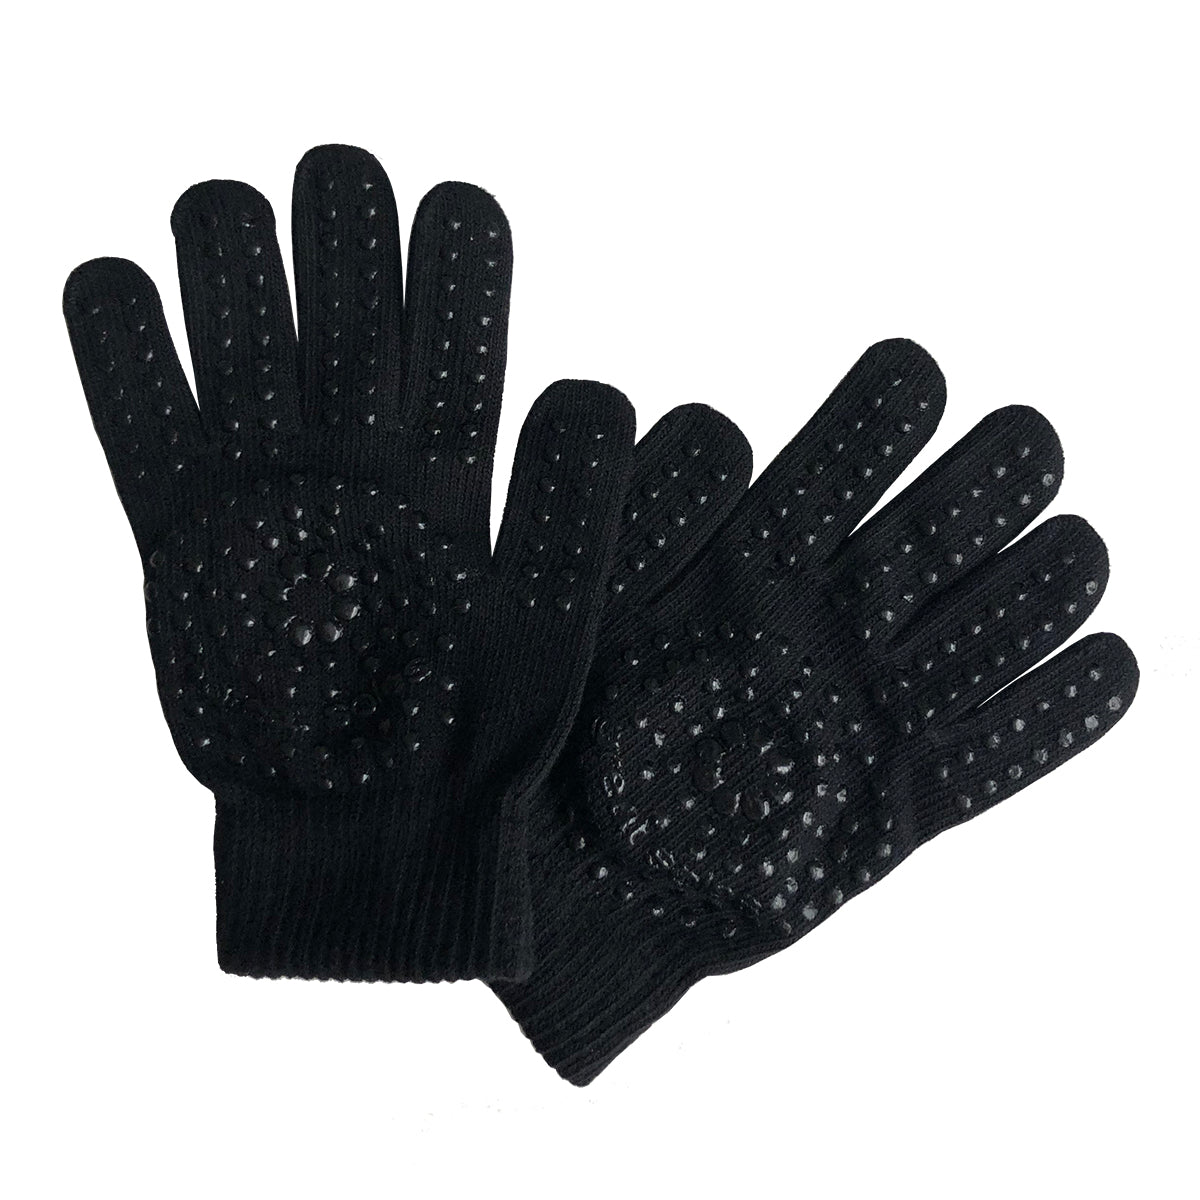 Reese Cotton Grip Workout Gloves  Black/Black